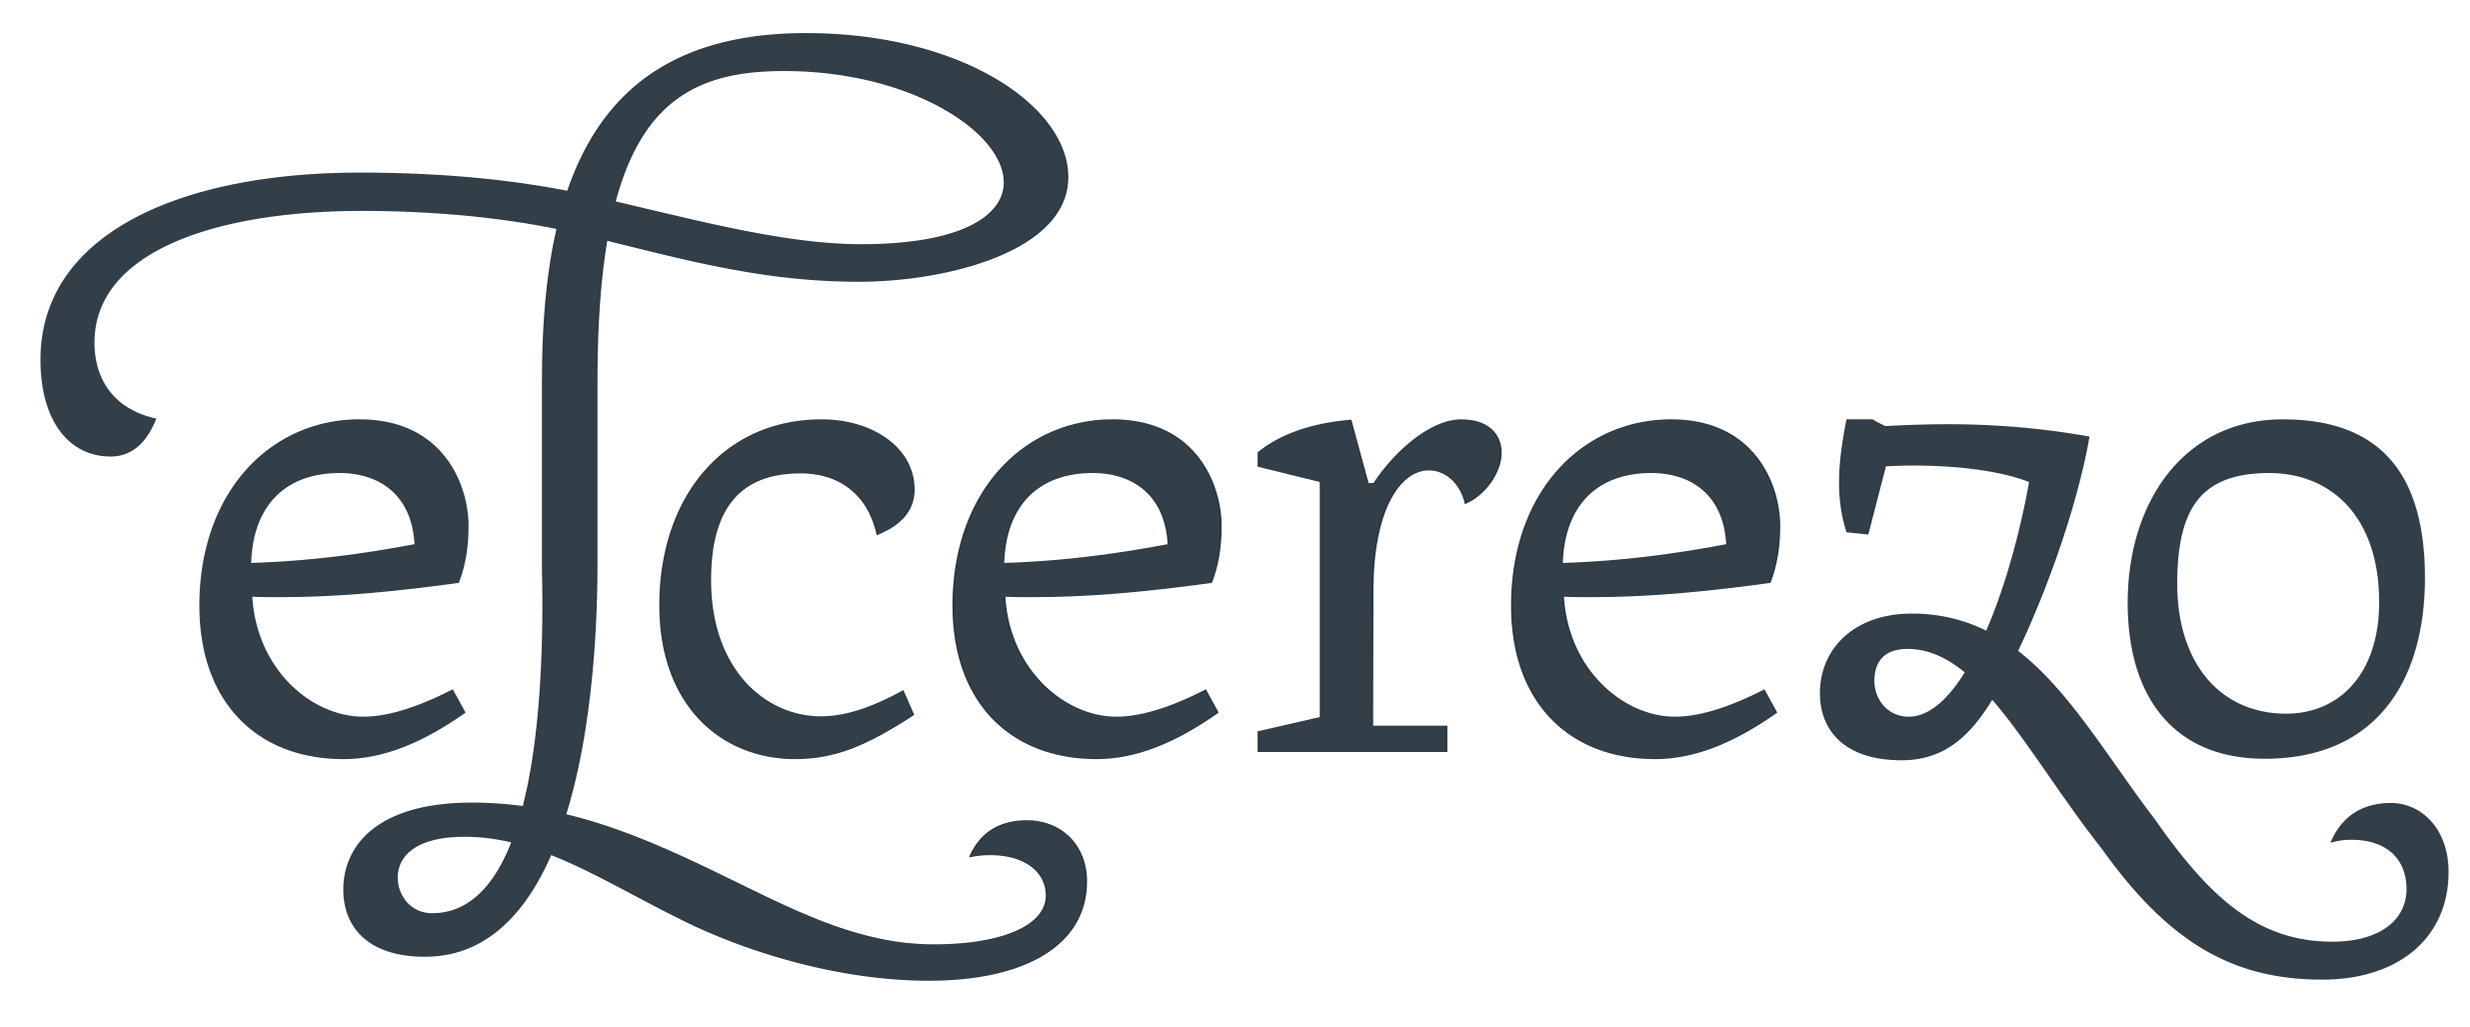 elcerezo — editorial, typeface and brand designer